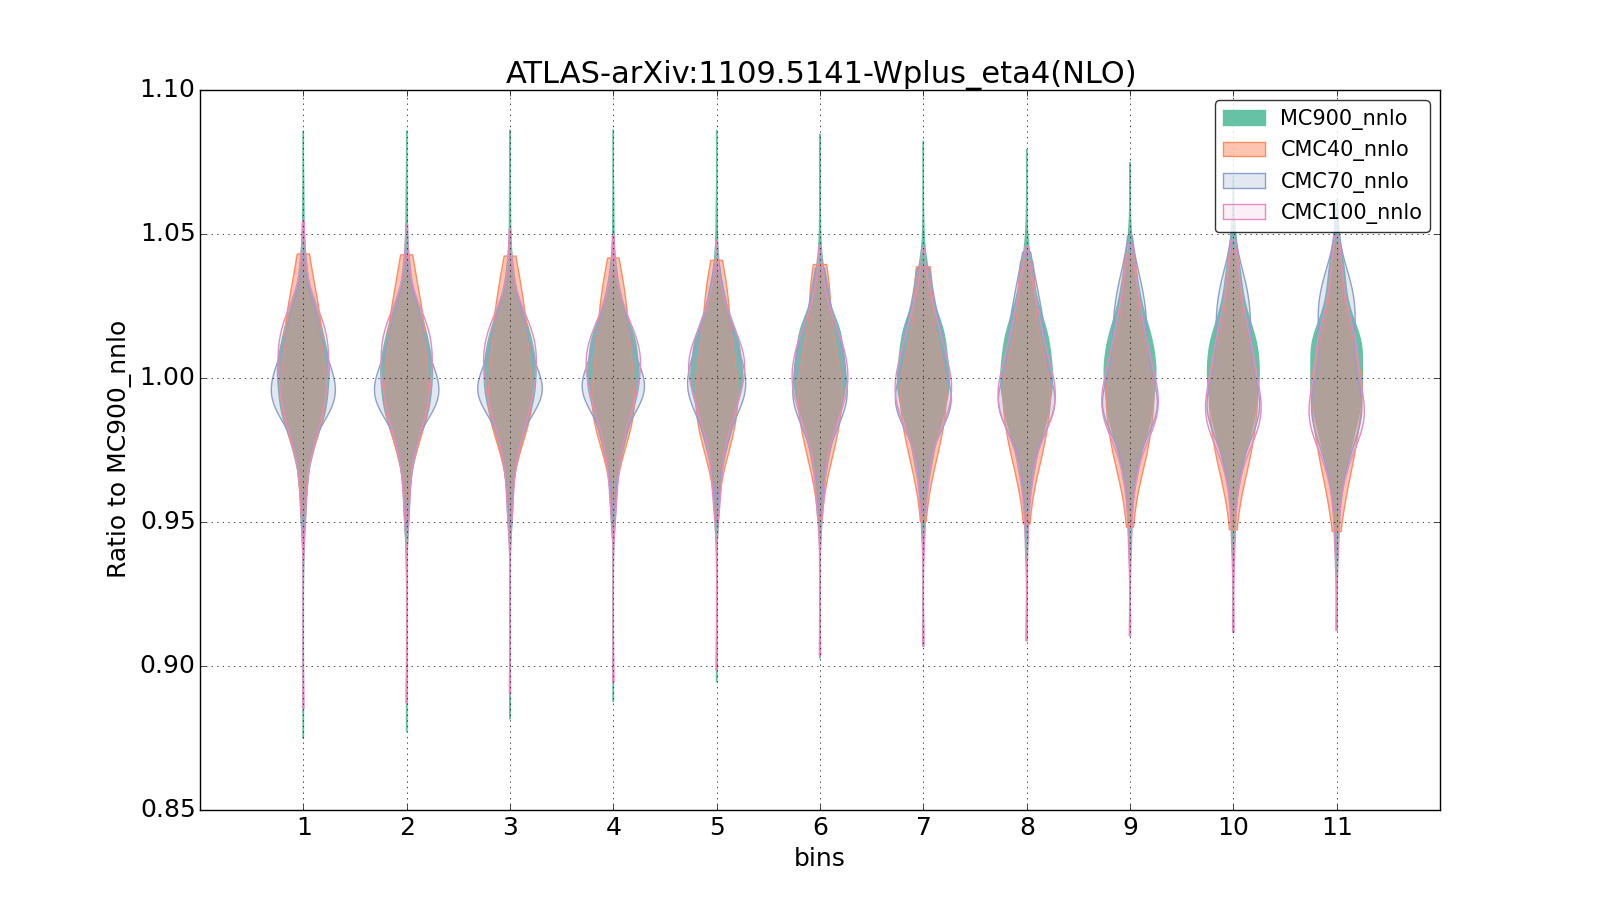 figure plots/CMCpheno/group_0_violinplot_ATLAS-arXiv:11095141-Wplus_eta4(NLO).png